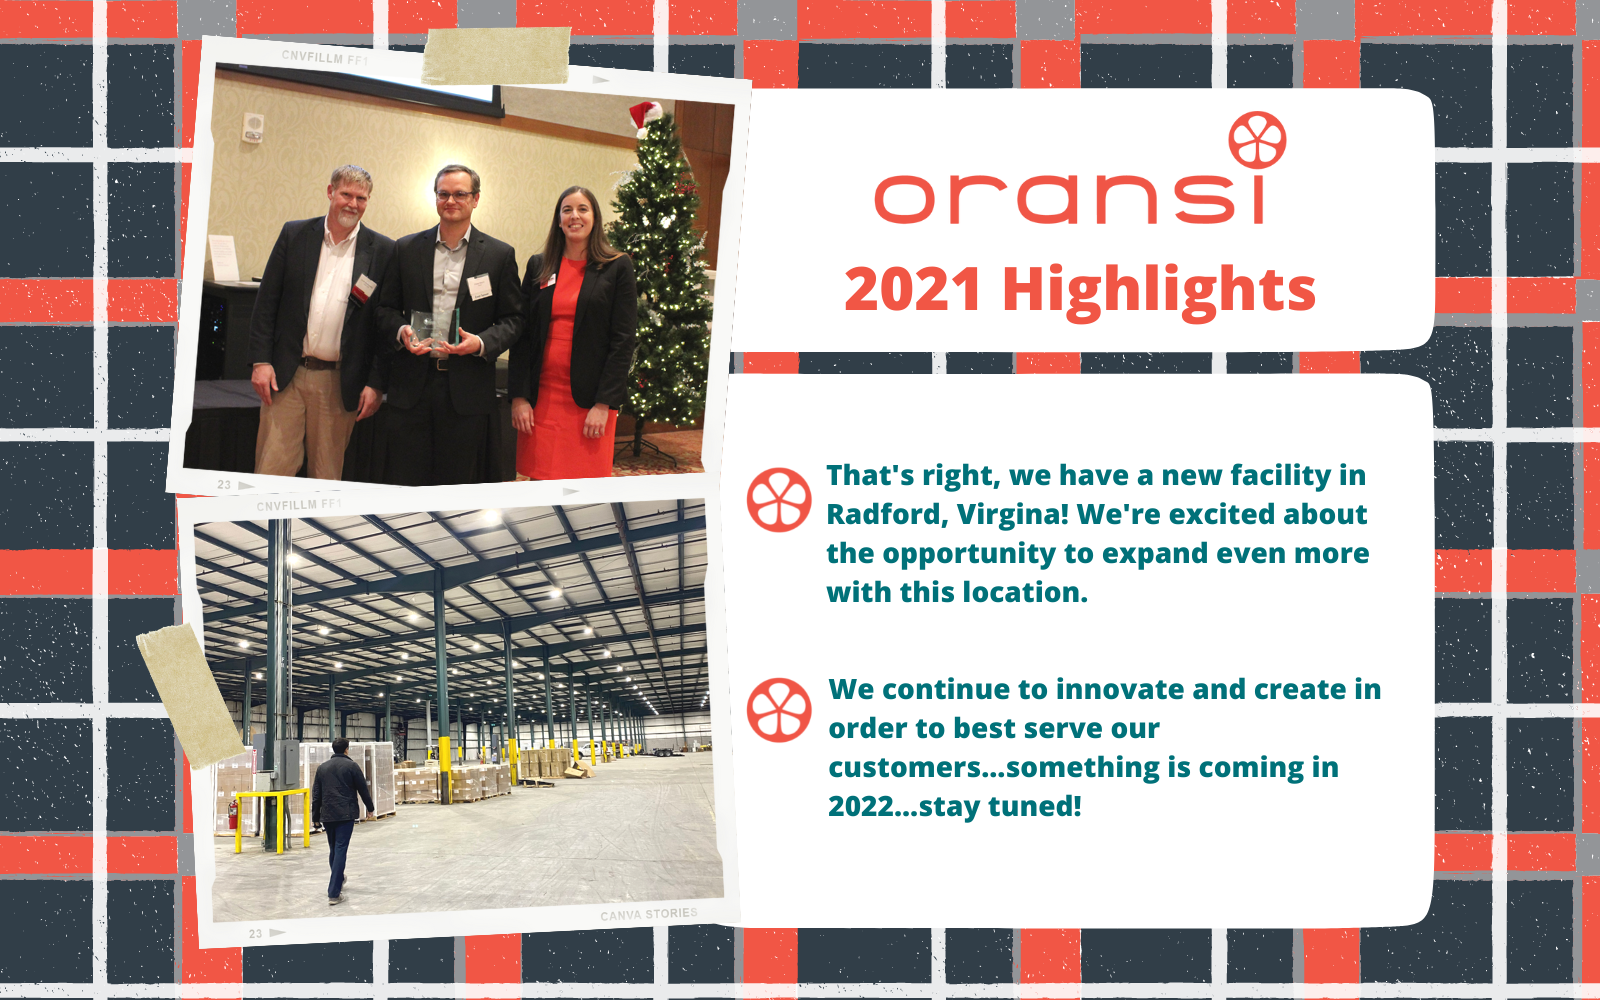 Oransi 2021 highlights including teasing 2022 plans and Radford Virginia facility